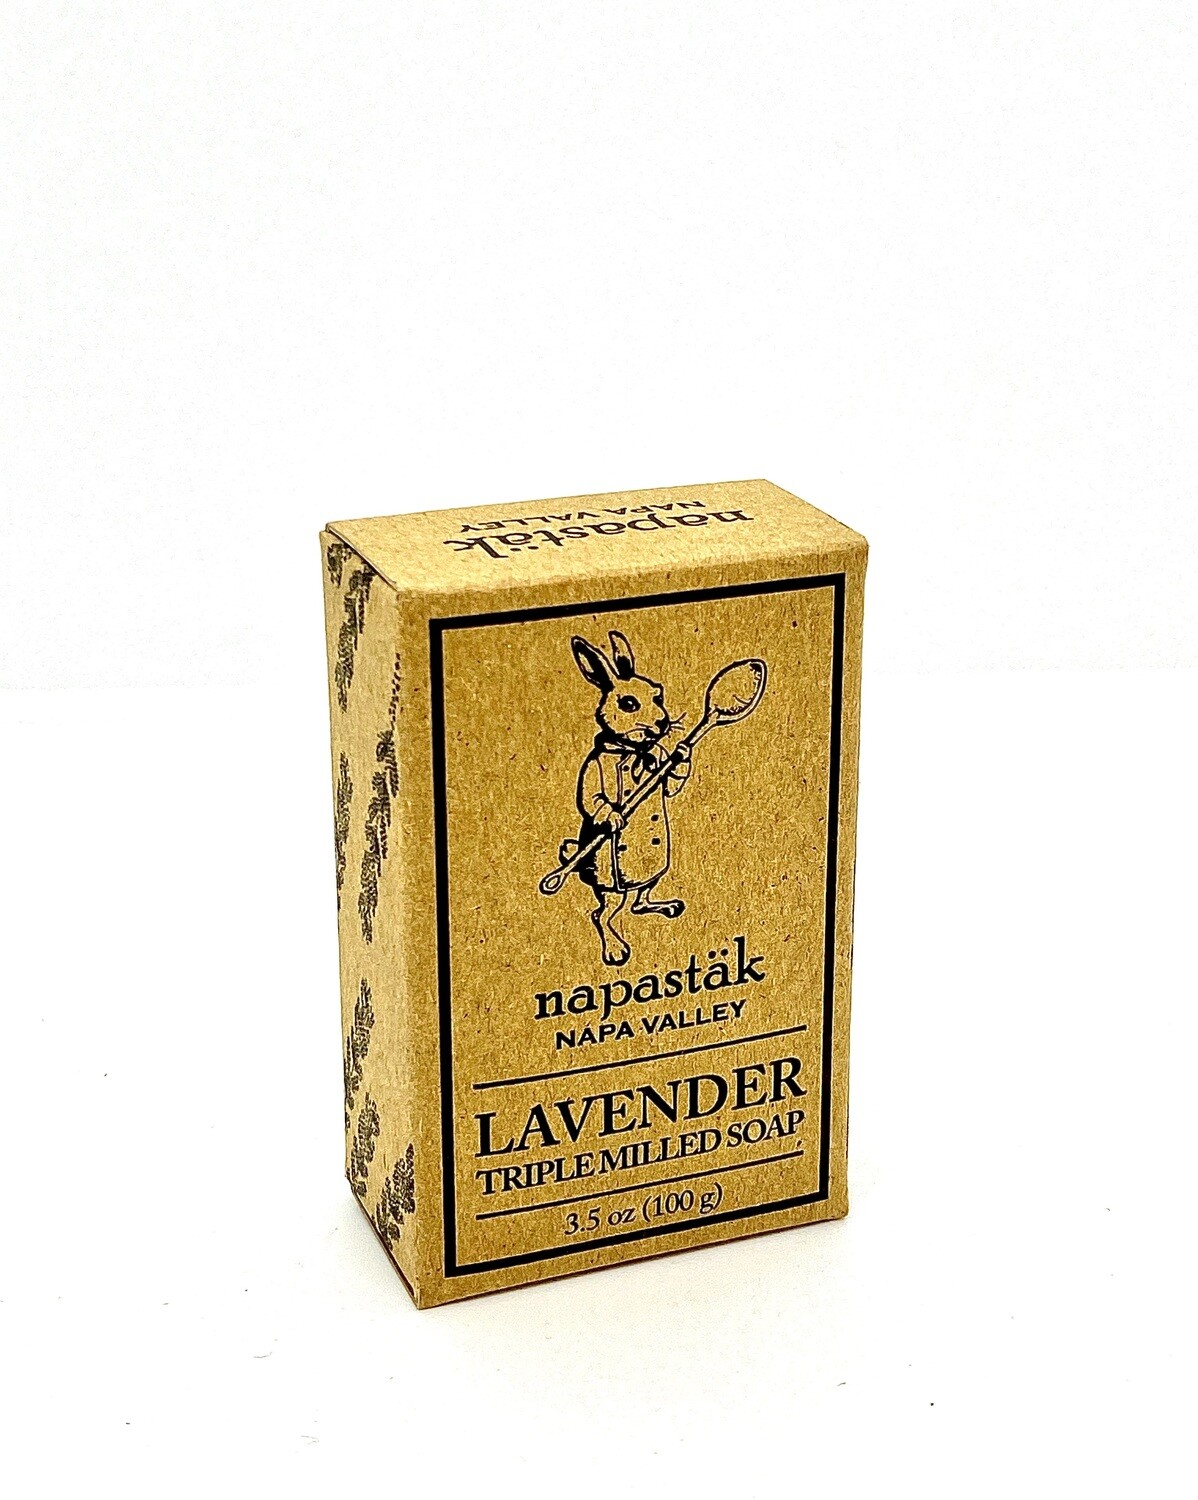 Napastäk Lavender Bar Soap 